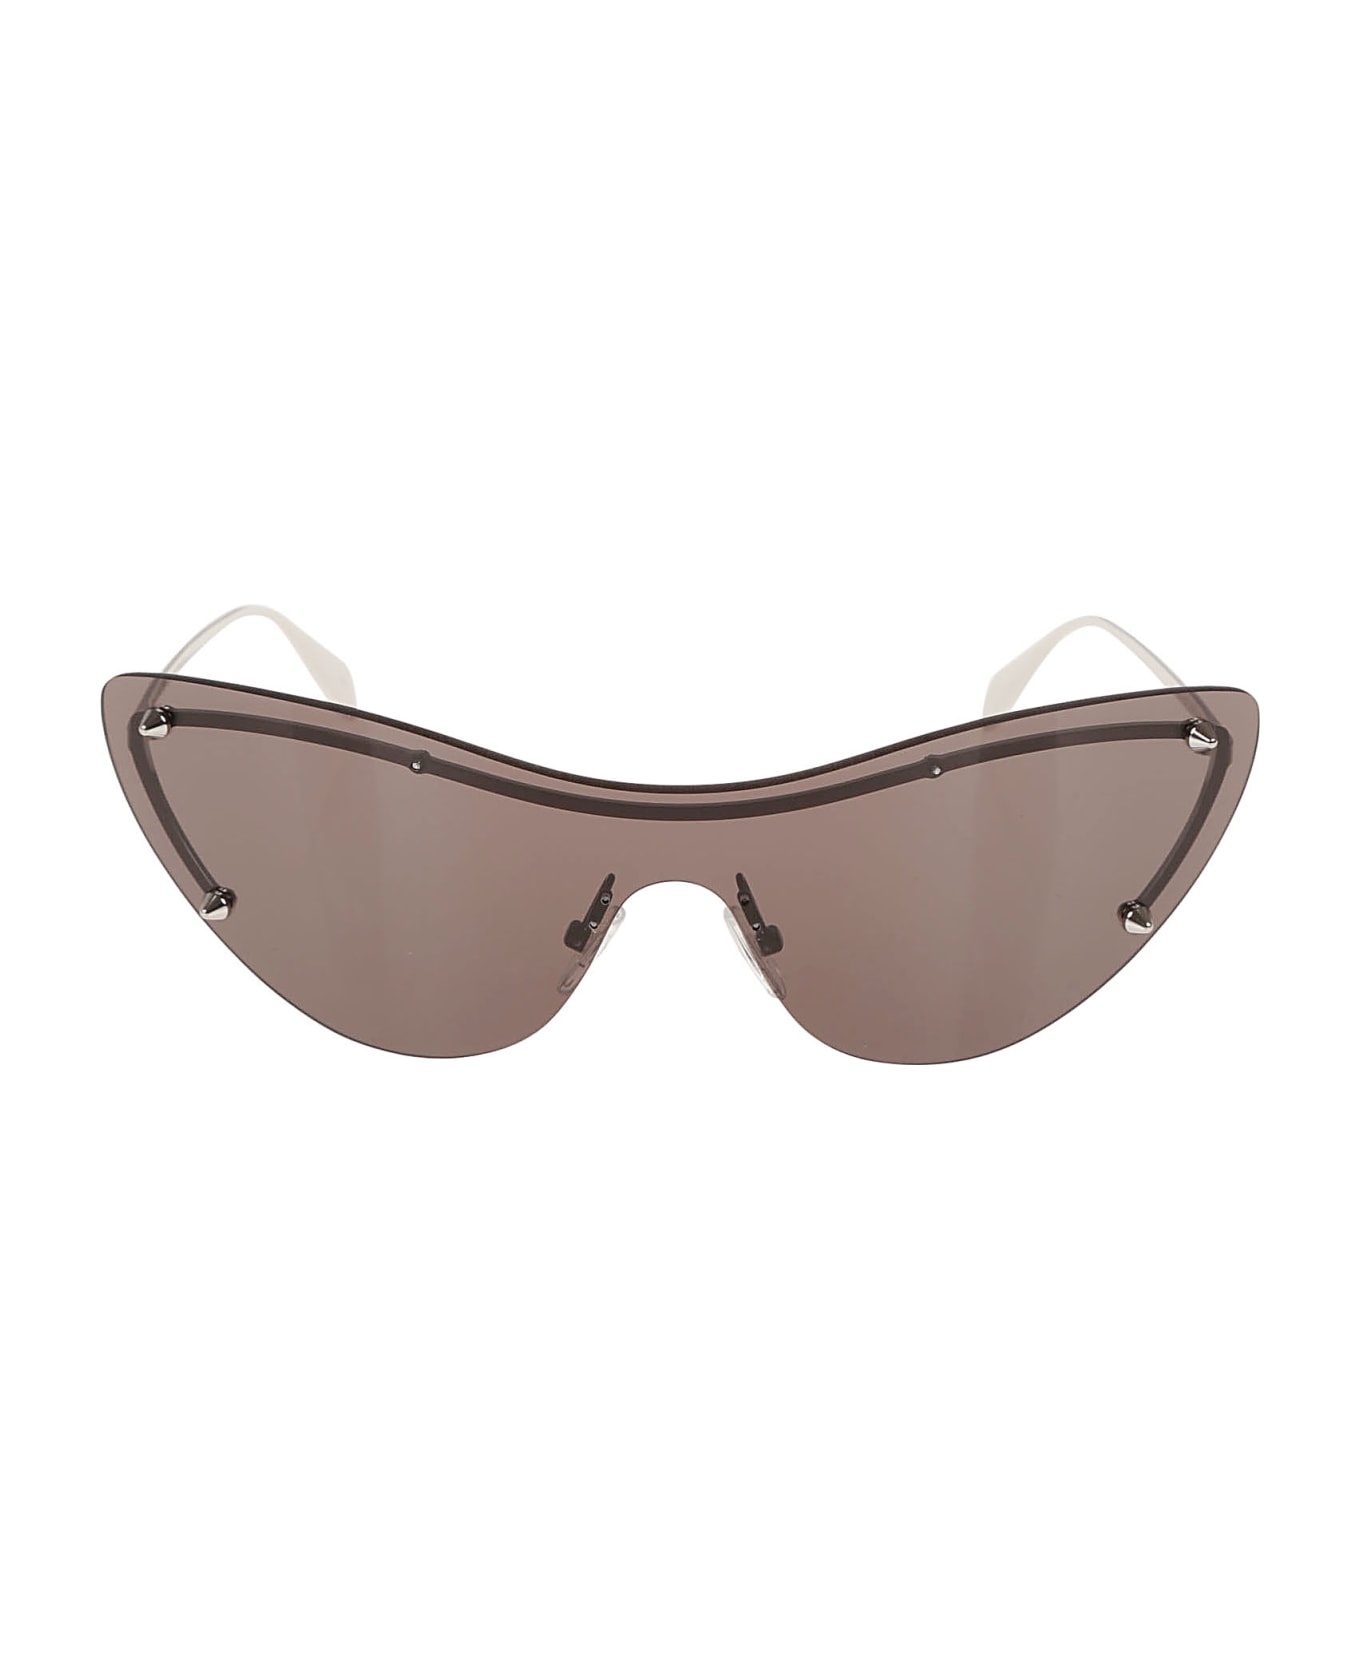 Alexander McQueen Eyewear Am0413s Sunglasses - Silver Silver Smoke